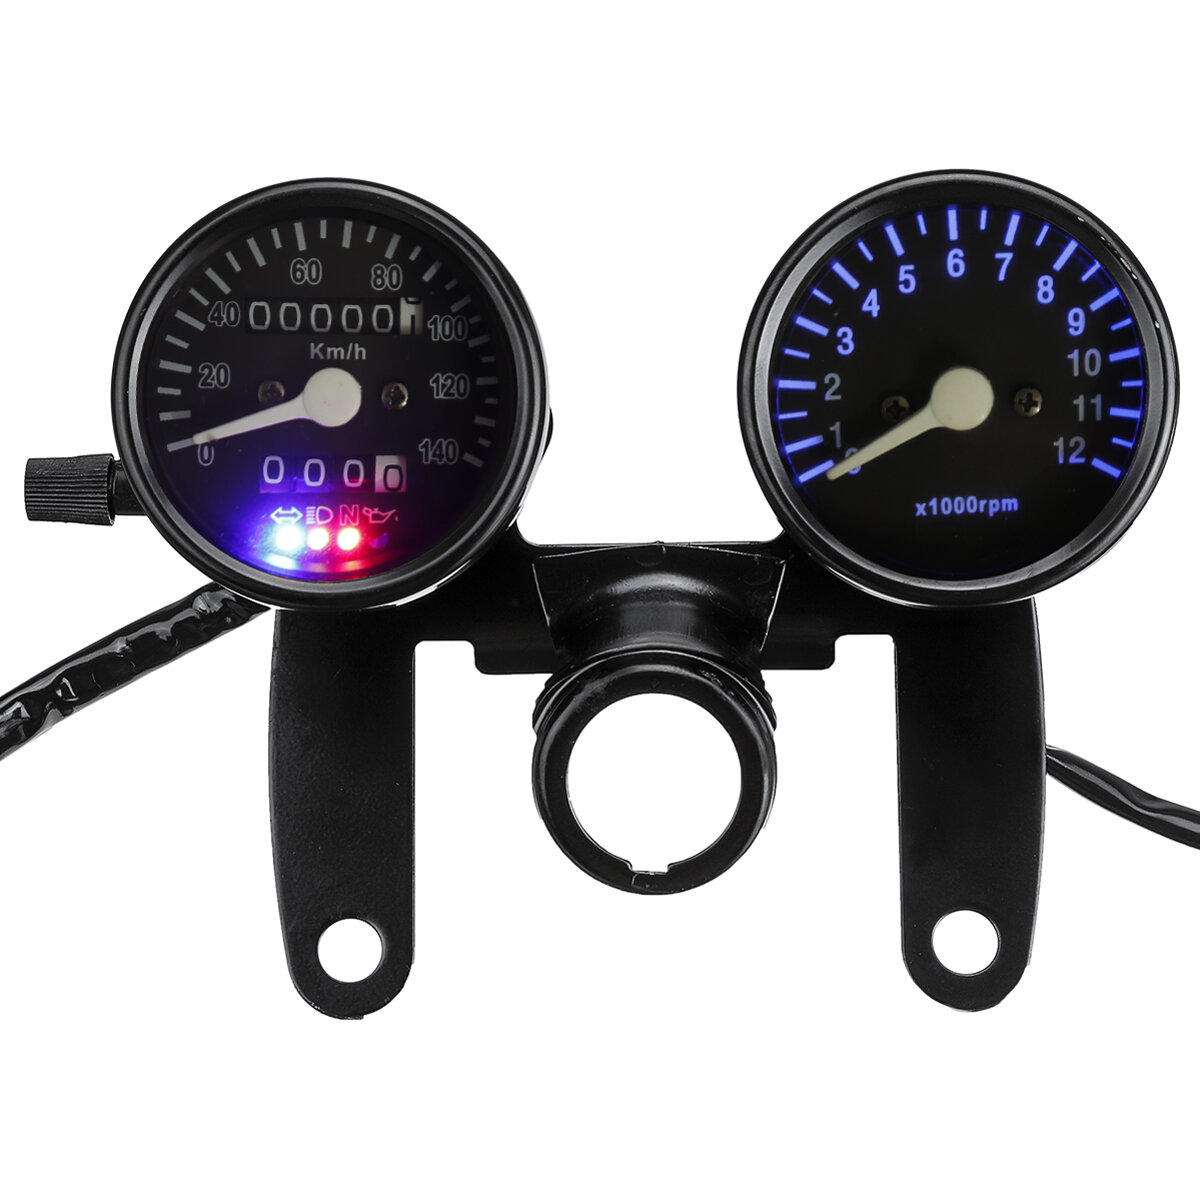 

12V Motorcycle LED Backlight Odometer and Tachometer Speedometer Dual Gauge Black Universal